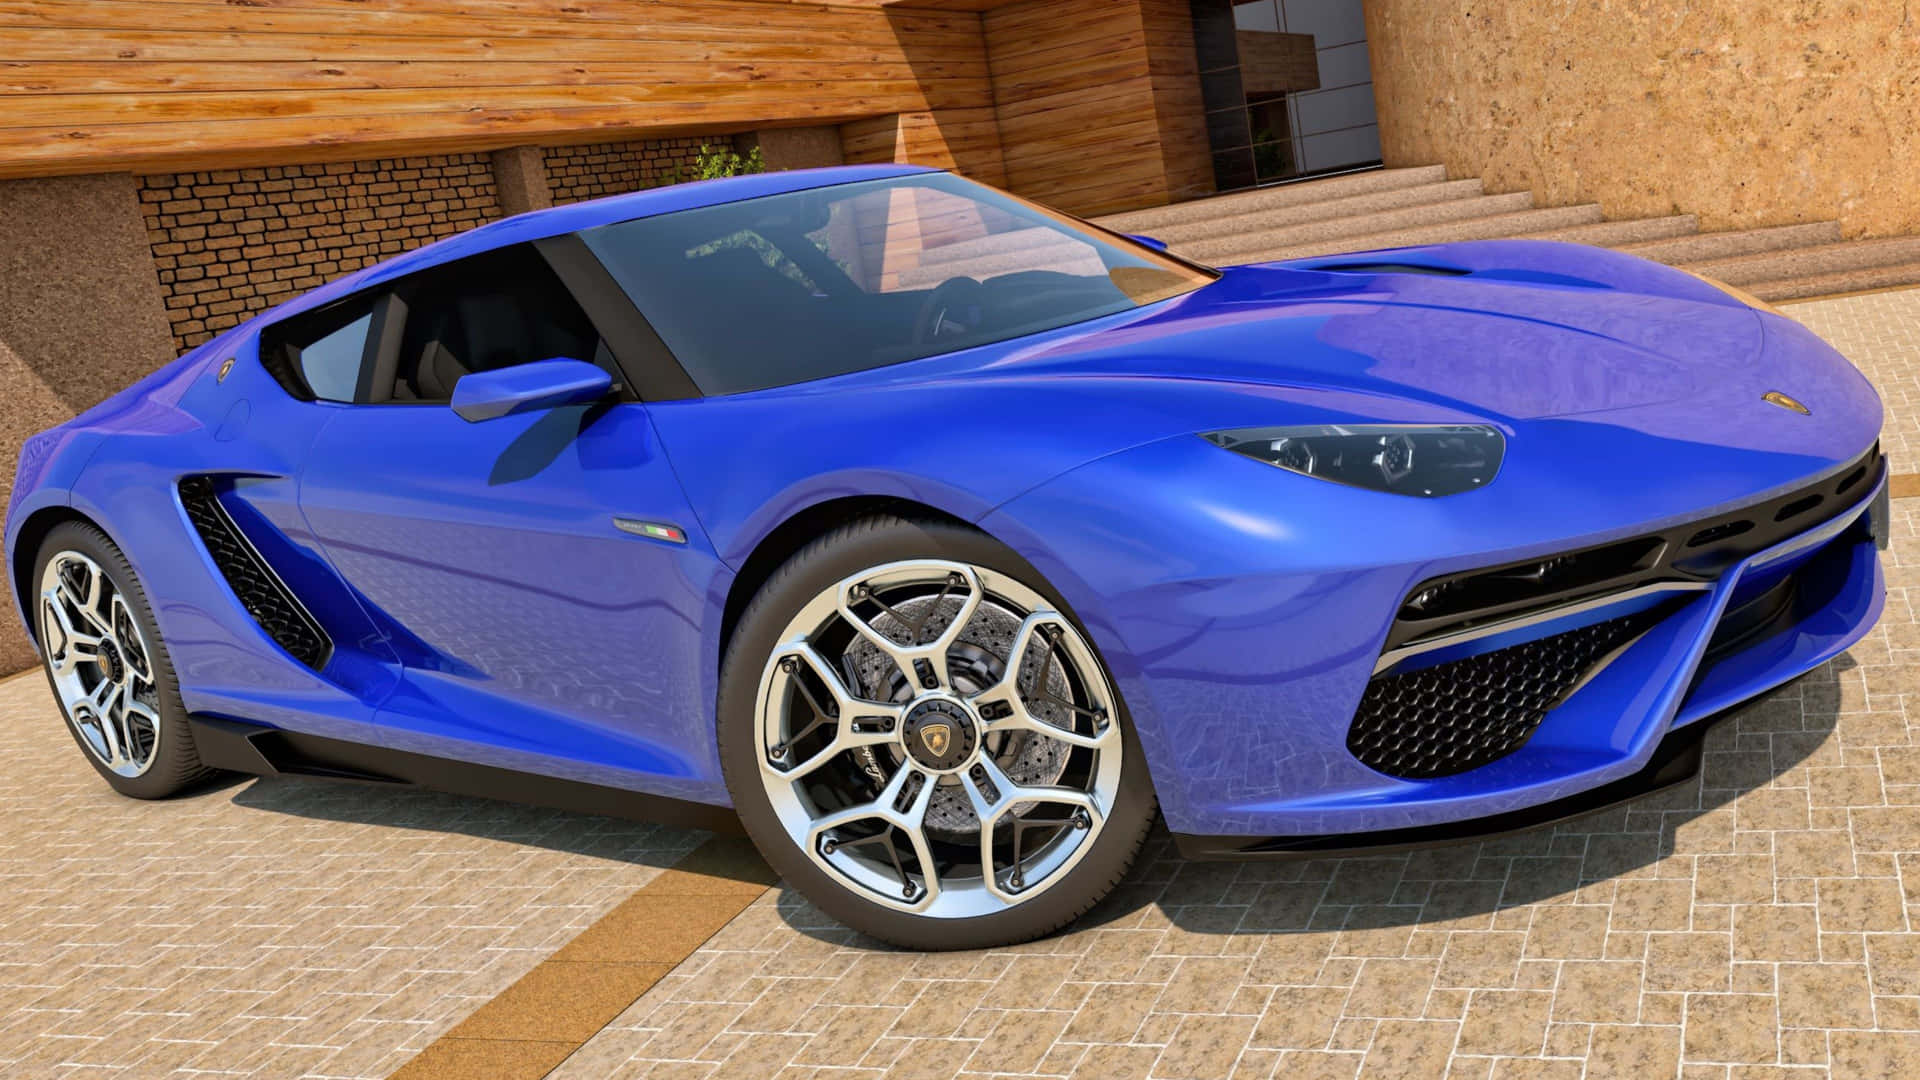 This stylish 4K Lamborghini will turn heads on the street